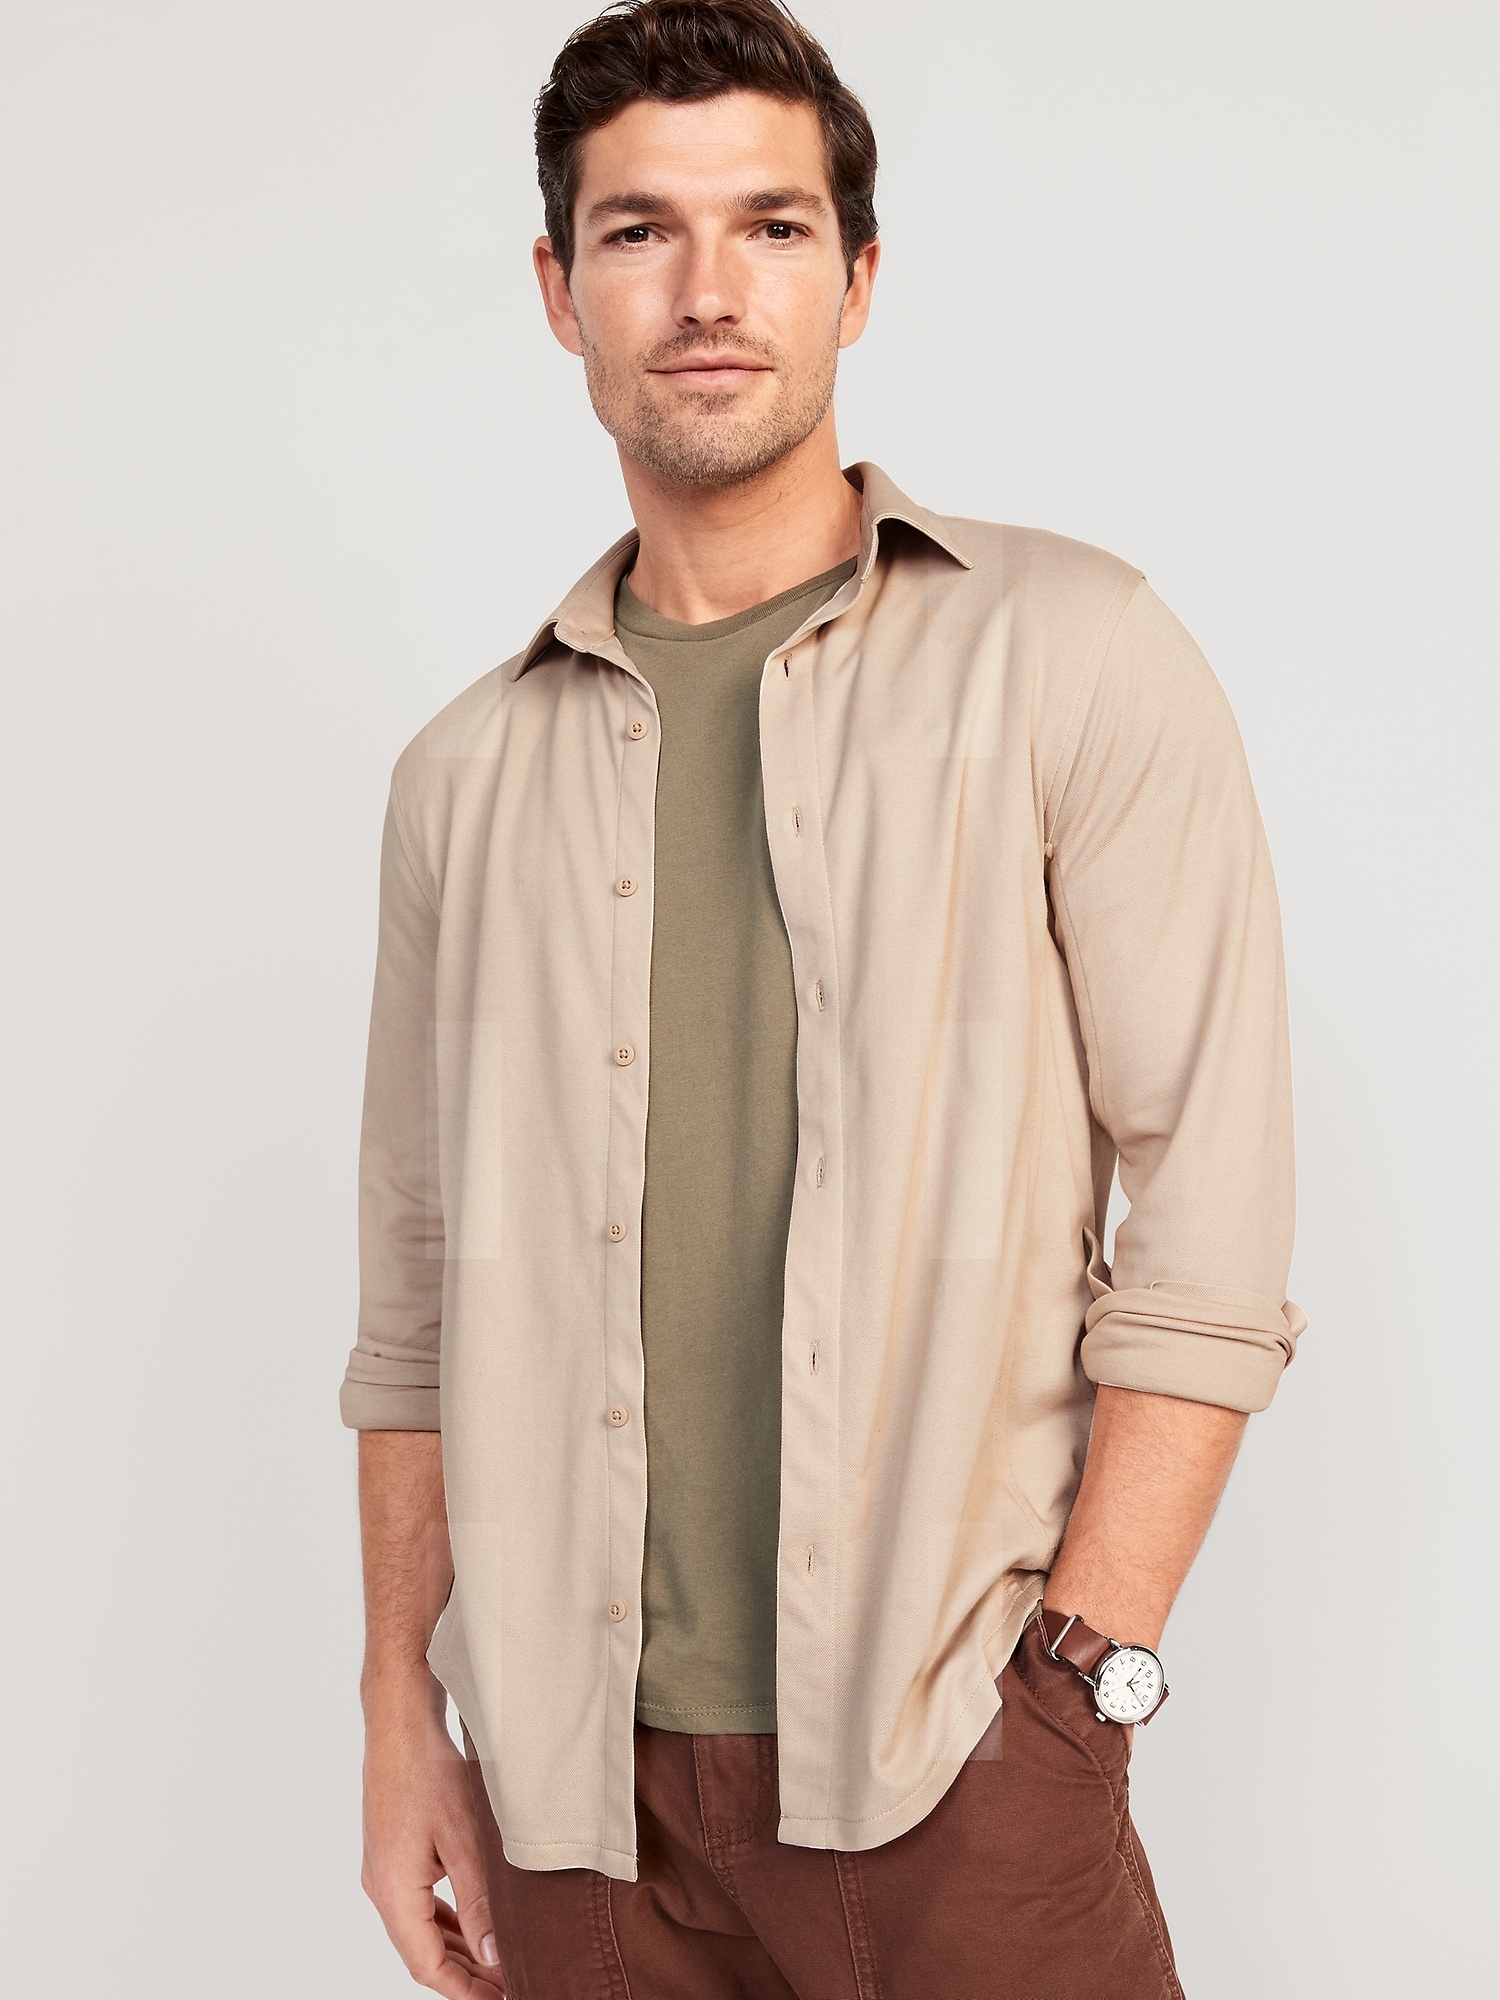 Old Navy Slim-Fit Long-Sleeve Performance Shirt for Men beige. 1